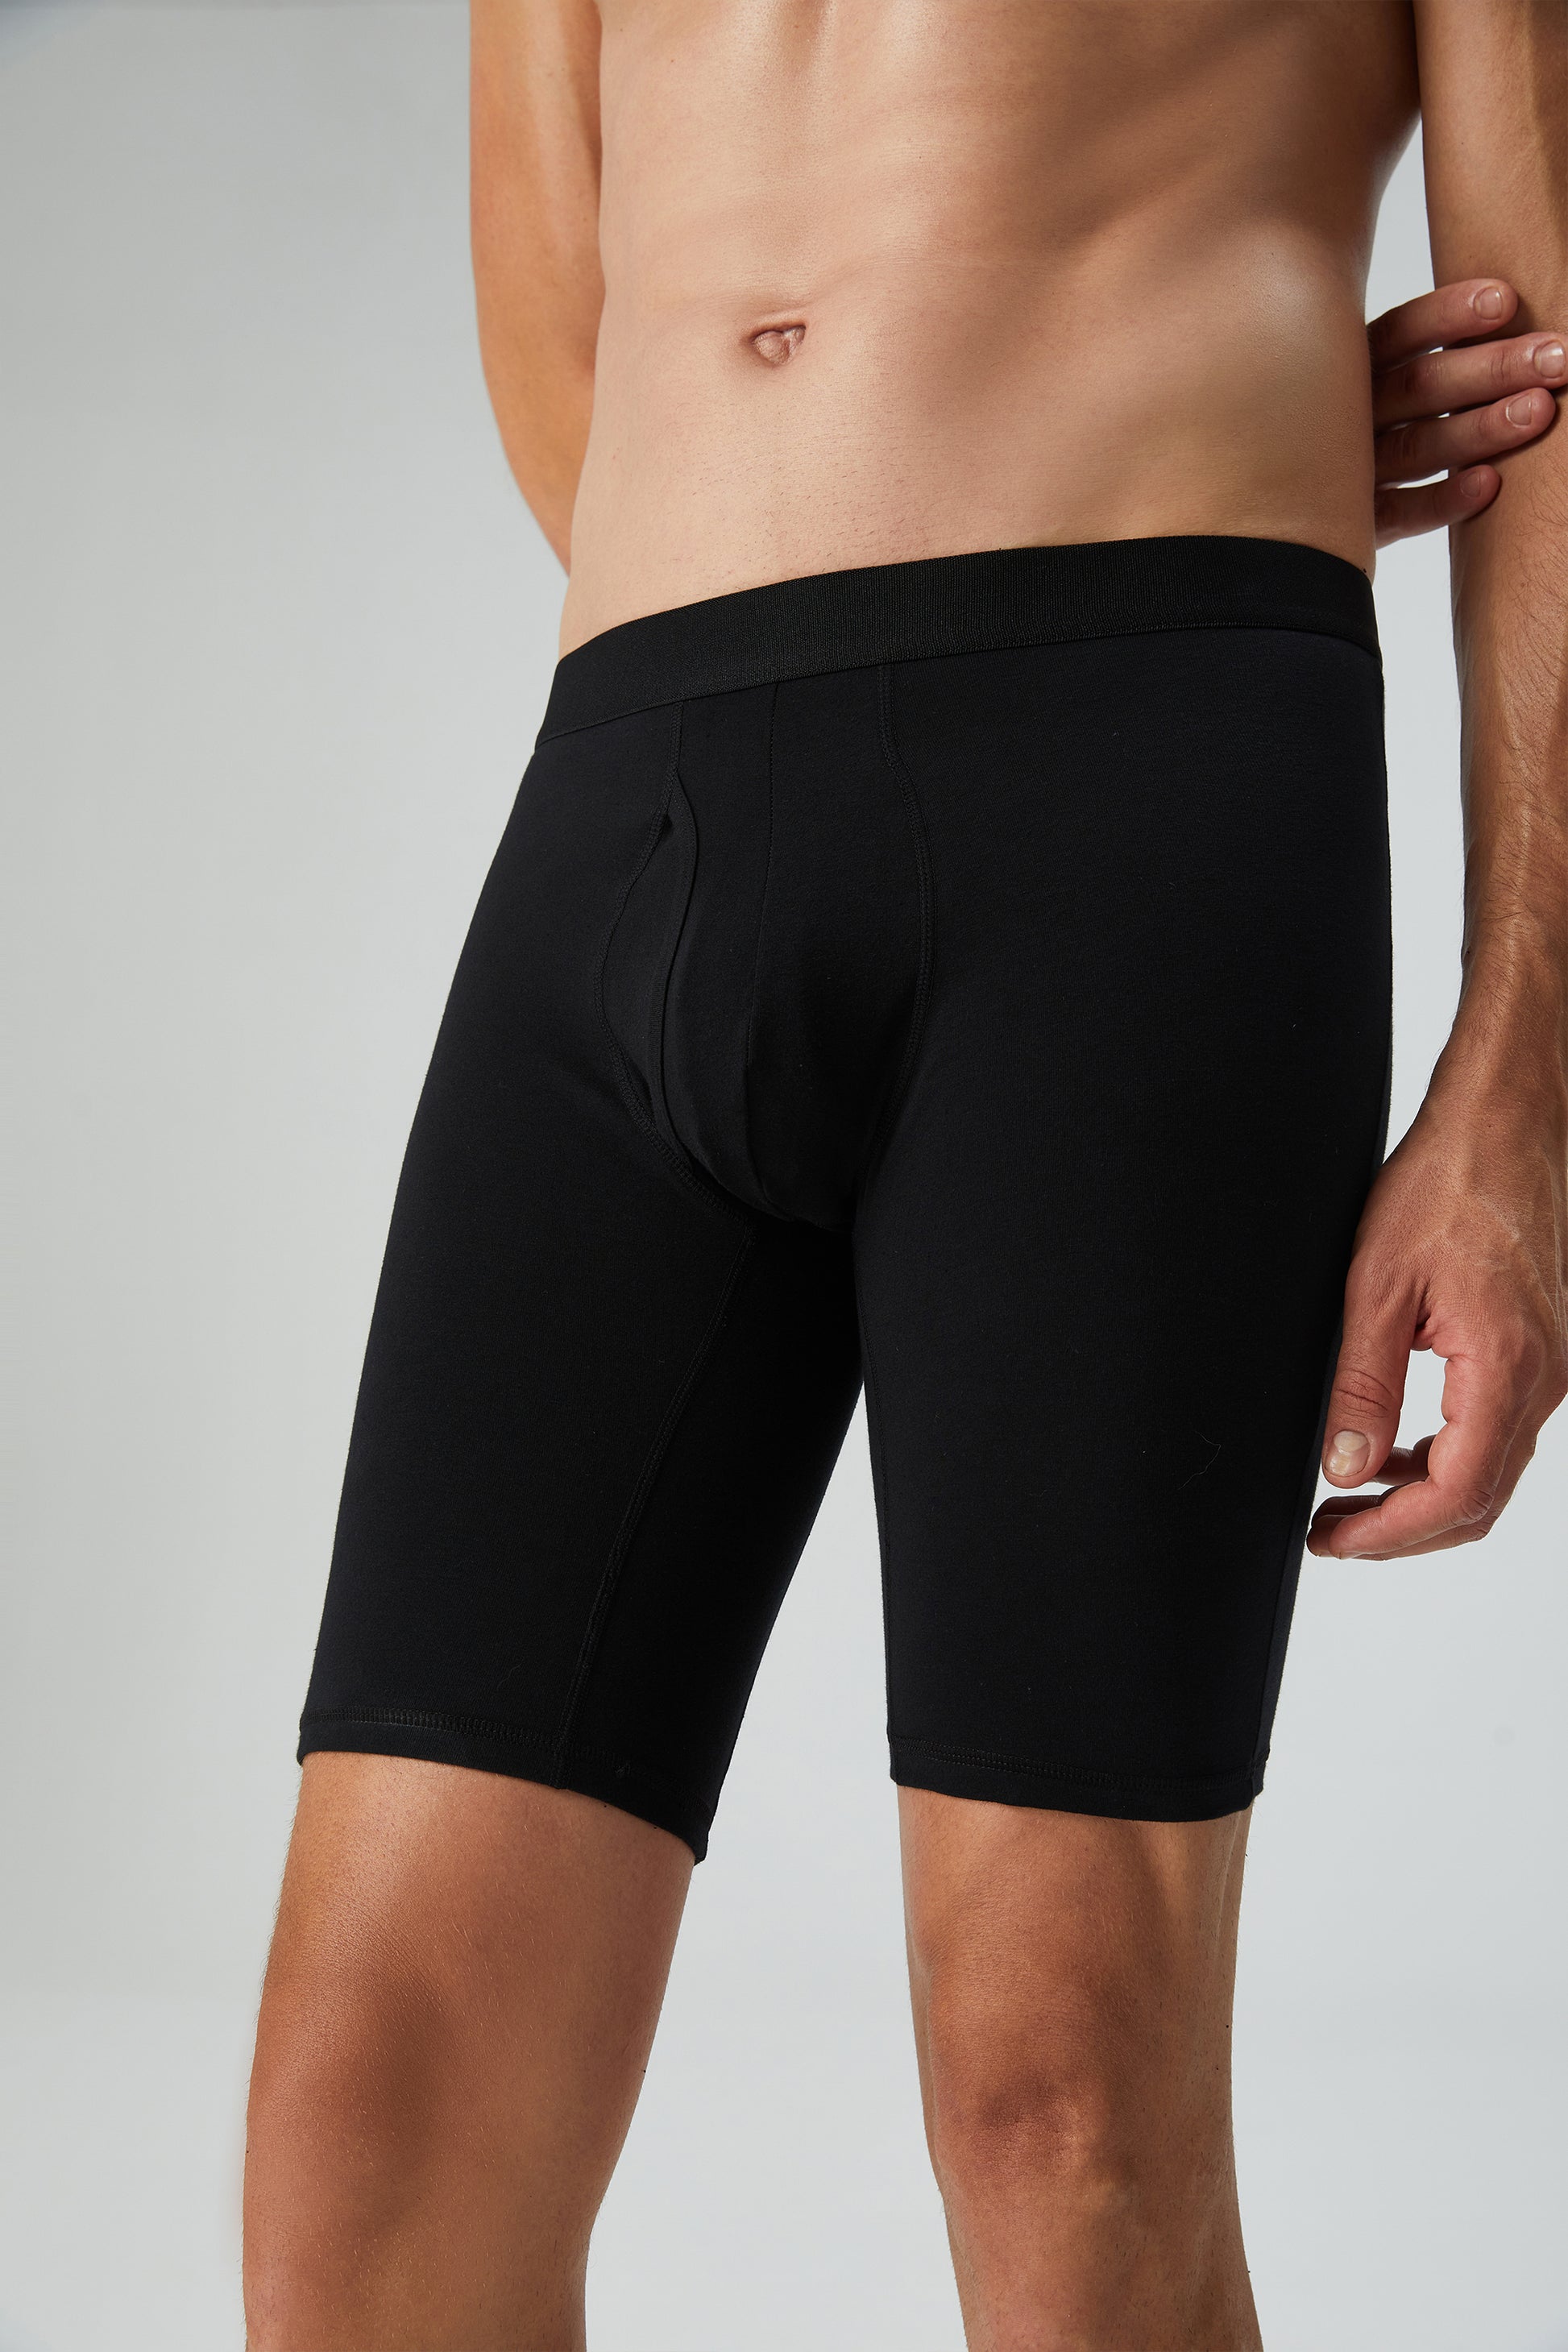 Natural Feelings Mens Underwear Modal Boxer Briefs 9 Inch Long Leg Box